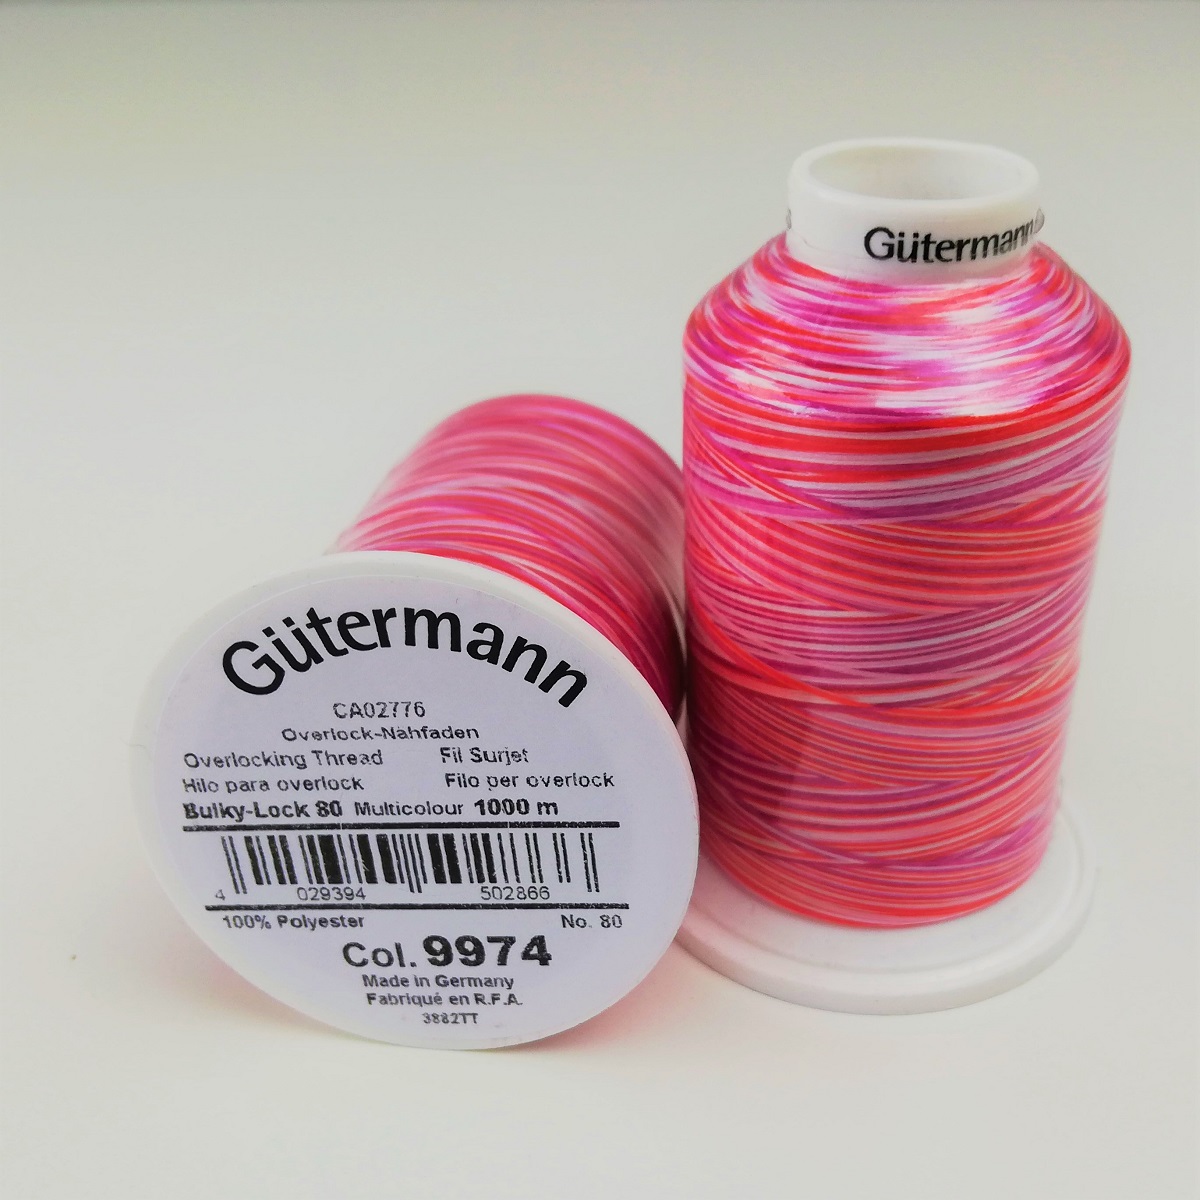 Gütermann Bauschgarn Bulky-Lock 80 Multicolor "pink rose" 9974, 1000m